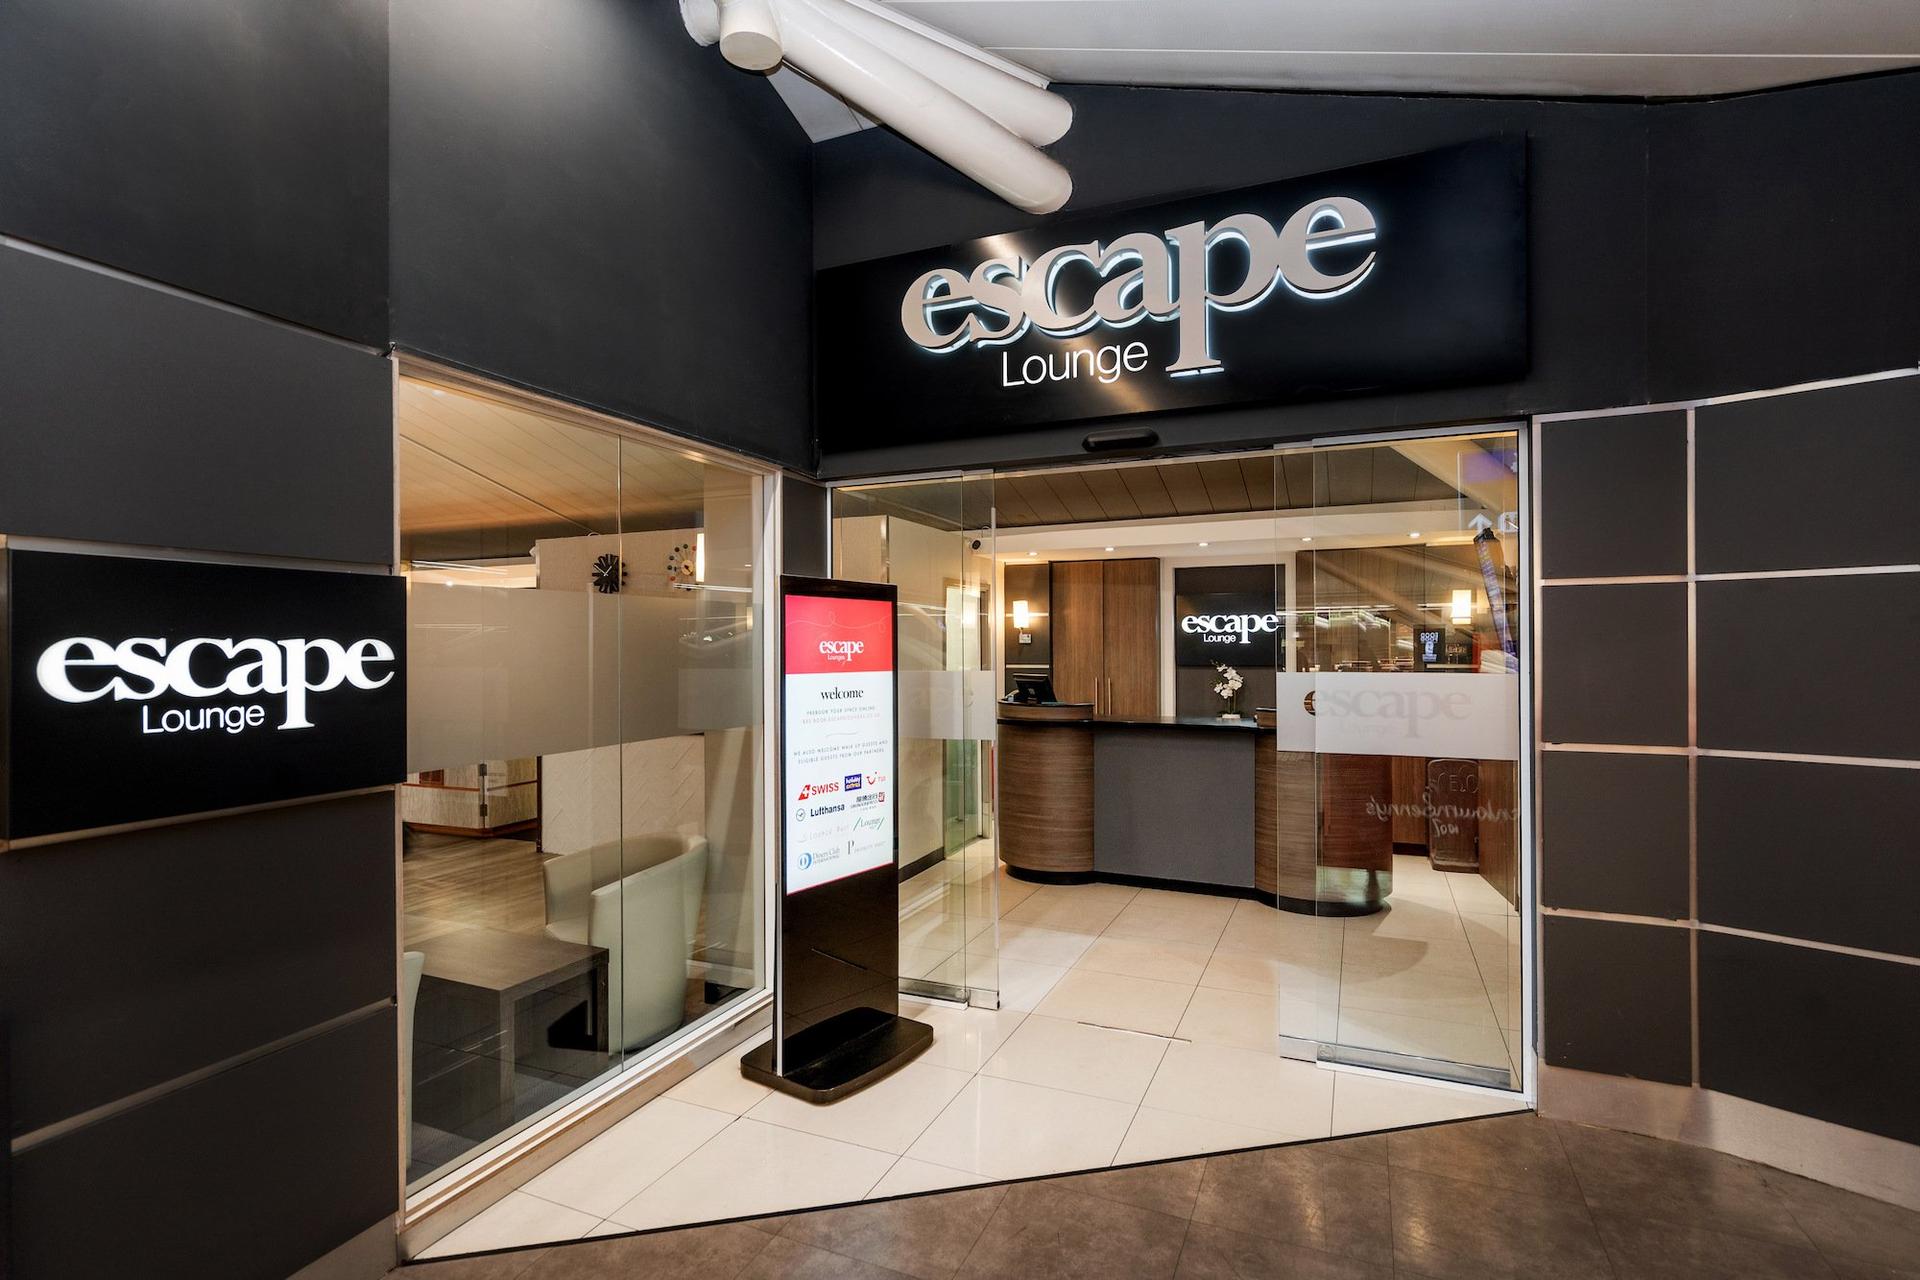 Escape Lounges image 4 of 10